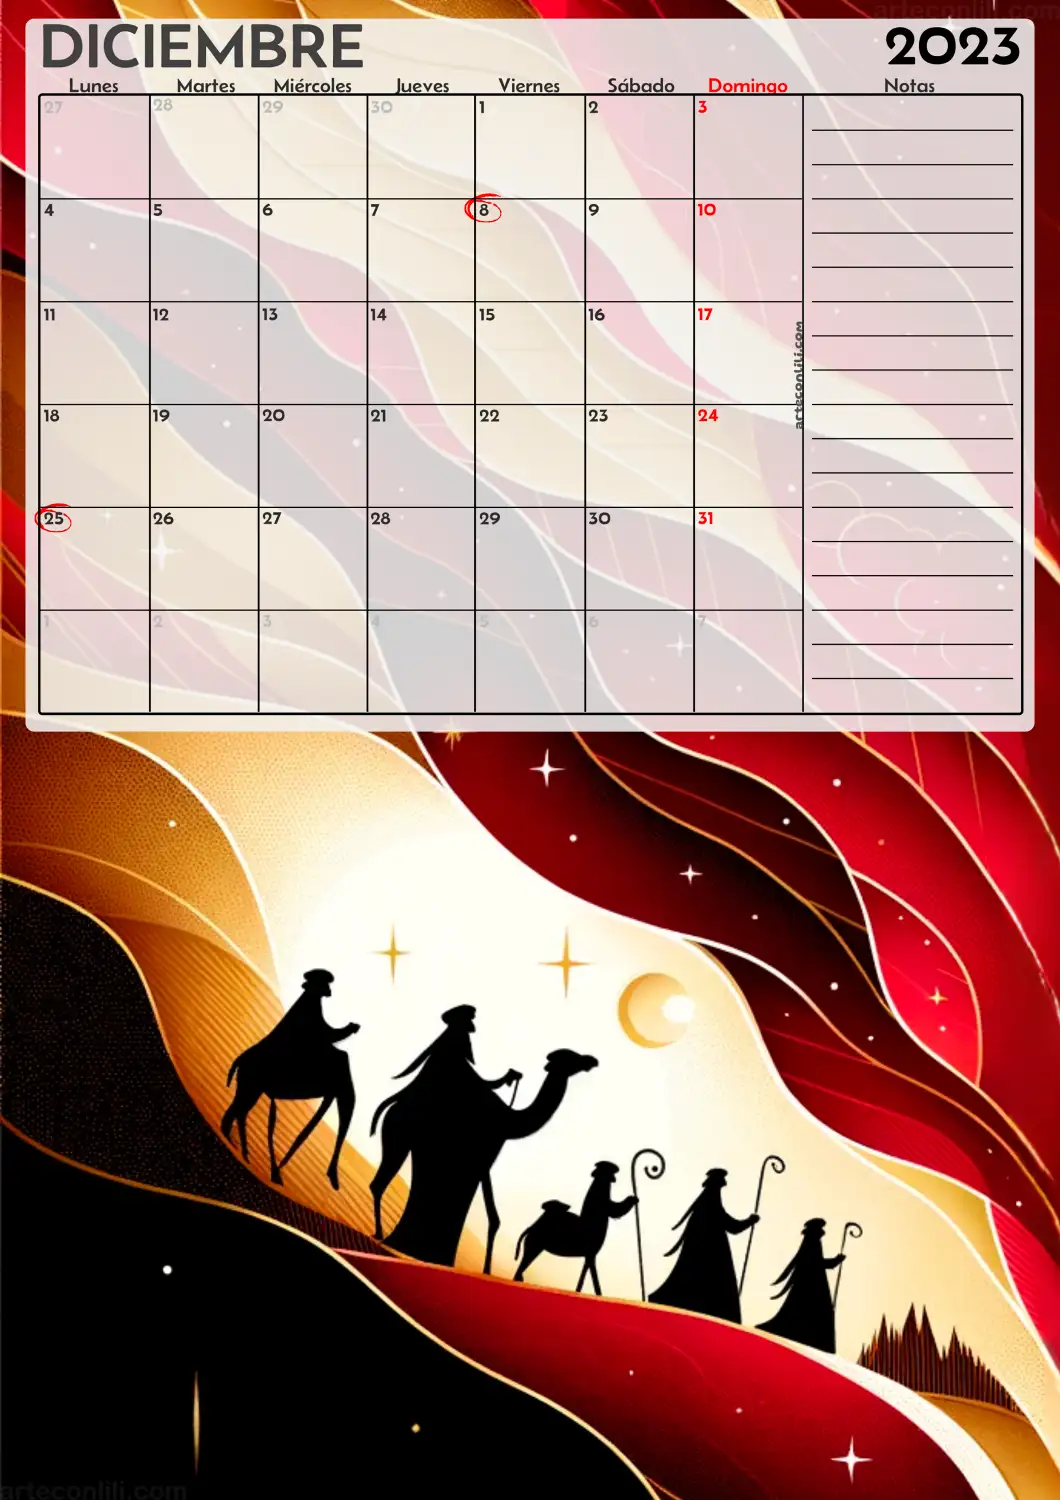 calendario diciembre 2023 motivos navidad arteconlili.com4